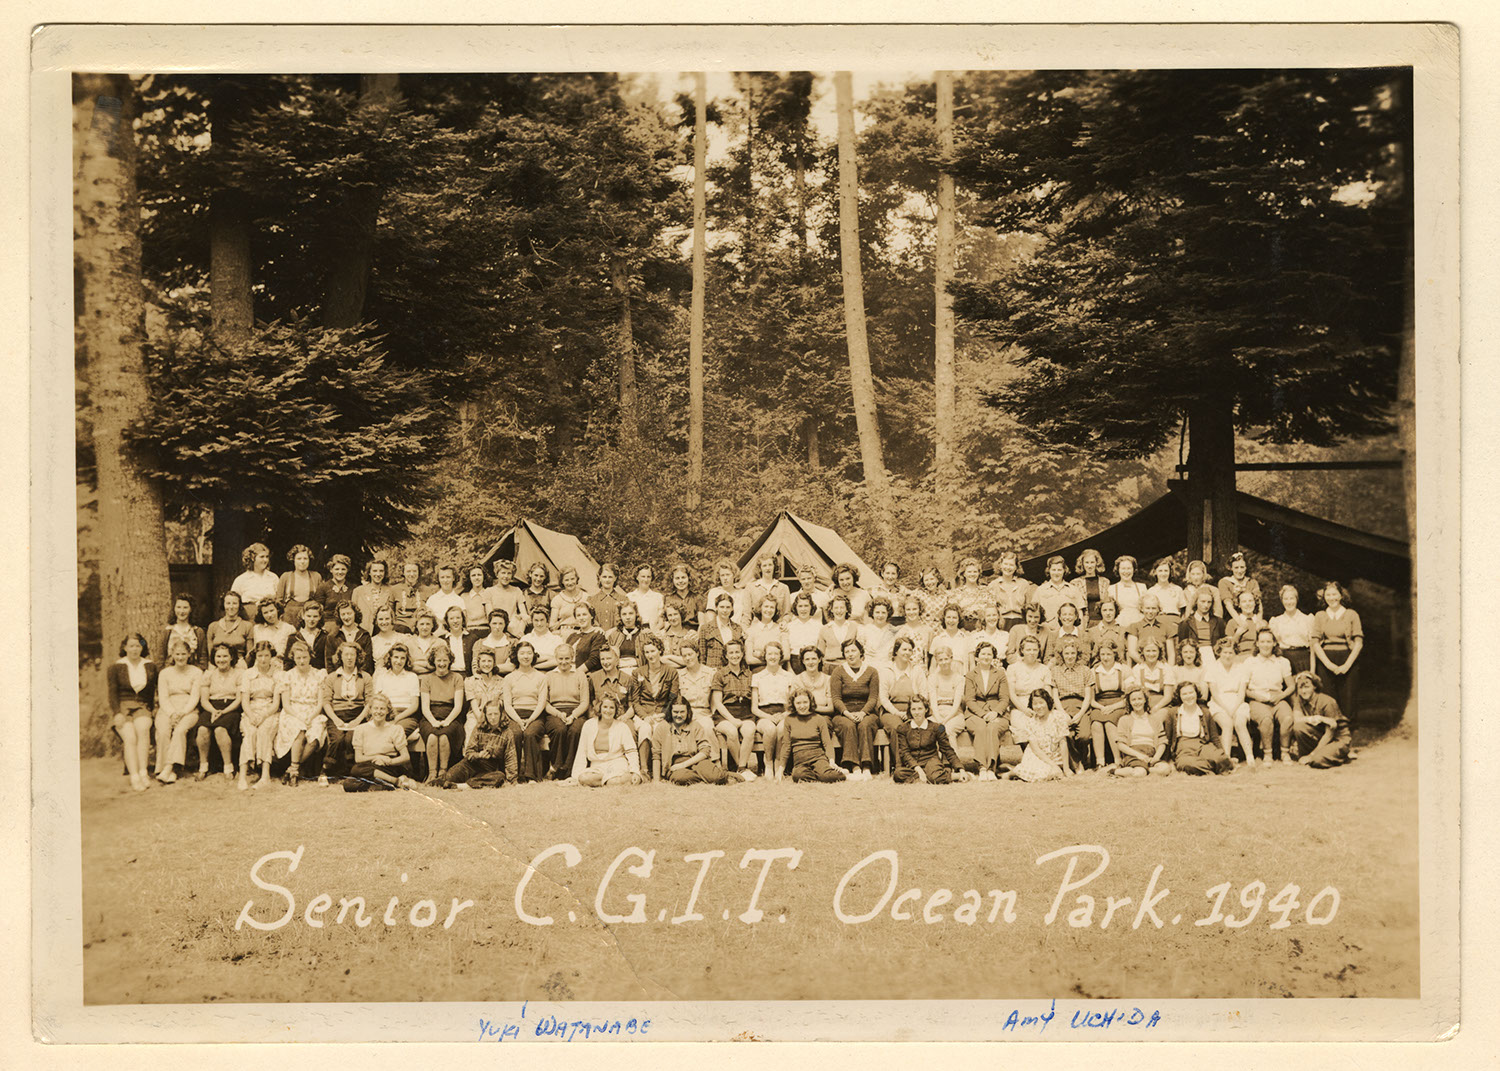 Senior CGIT Ocean Park, 1940